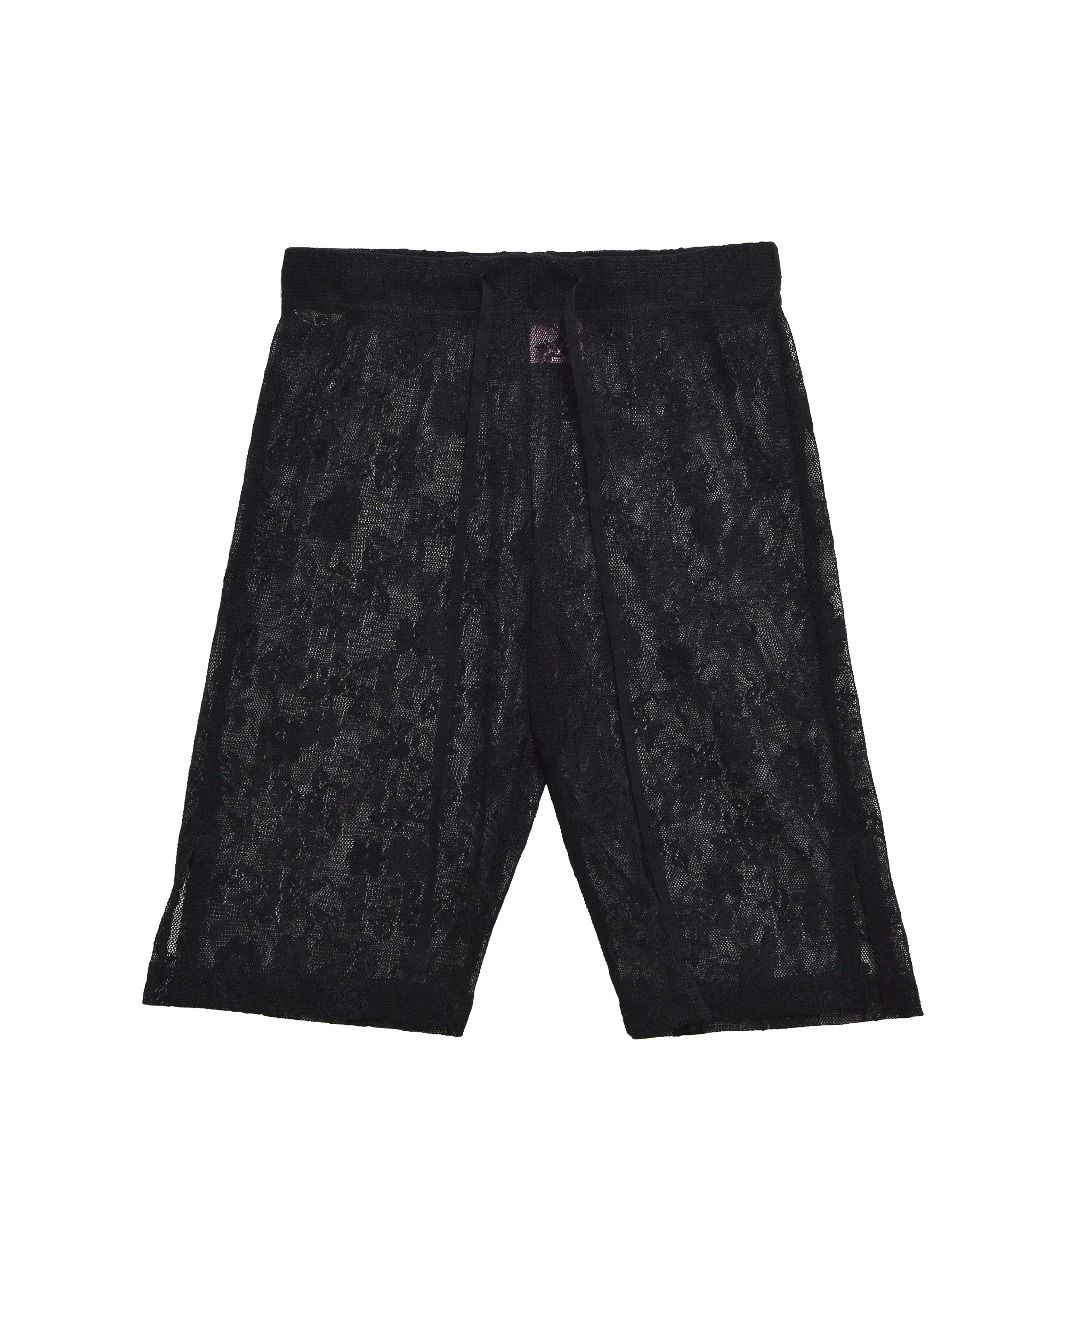 Lace String Shorts (Black)